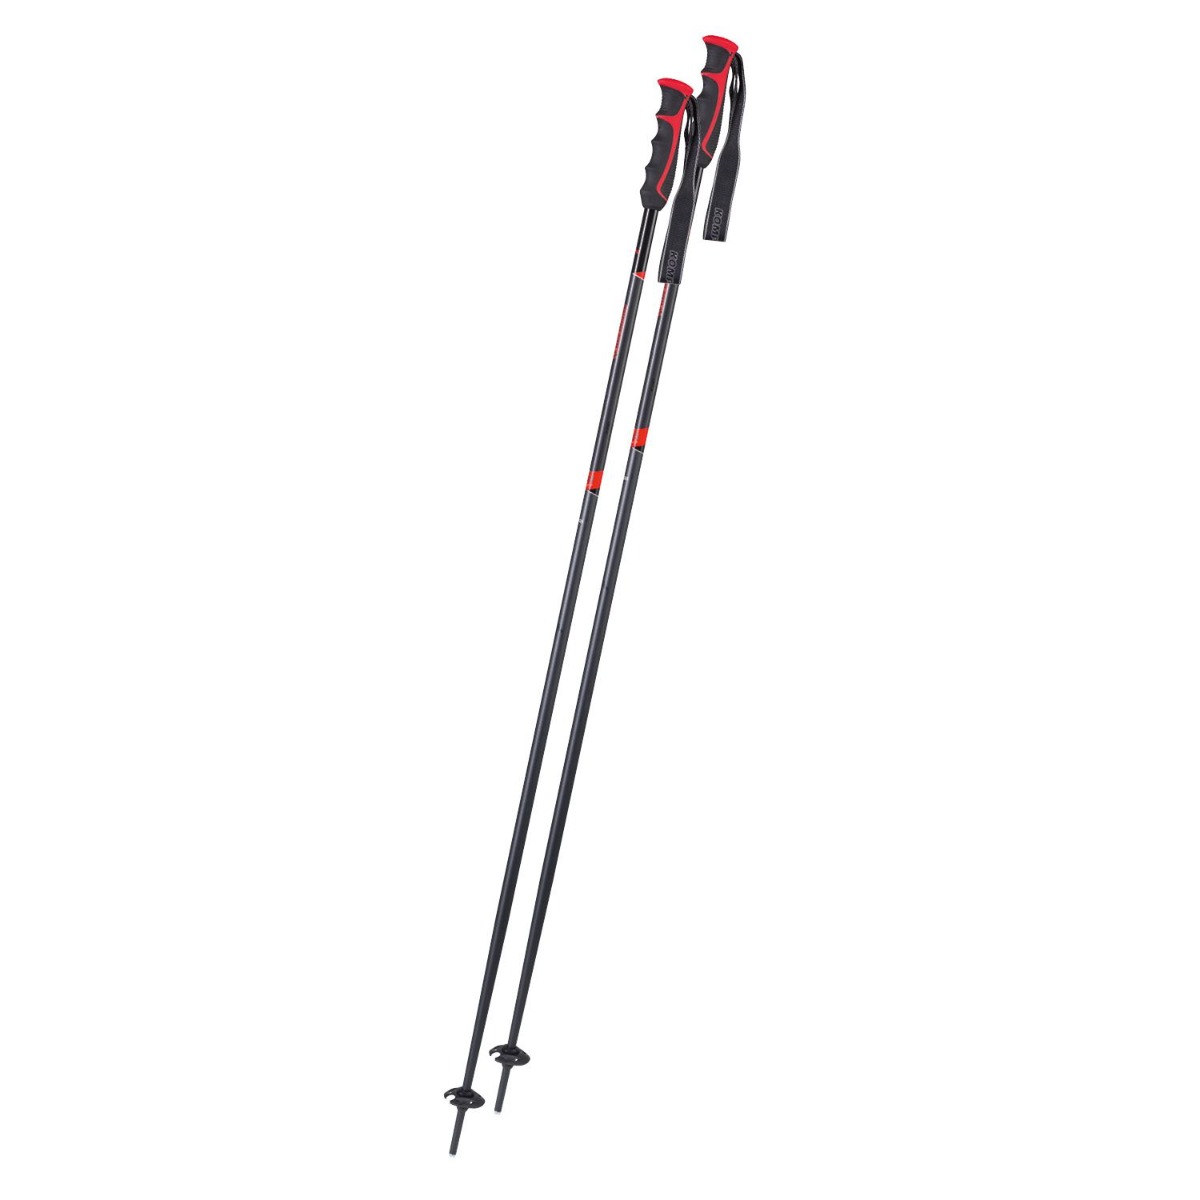 Komperdell Booster Speed Aluminium skistokken - Zwart/rood - 120 cm